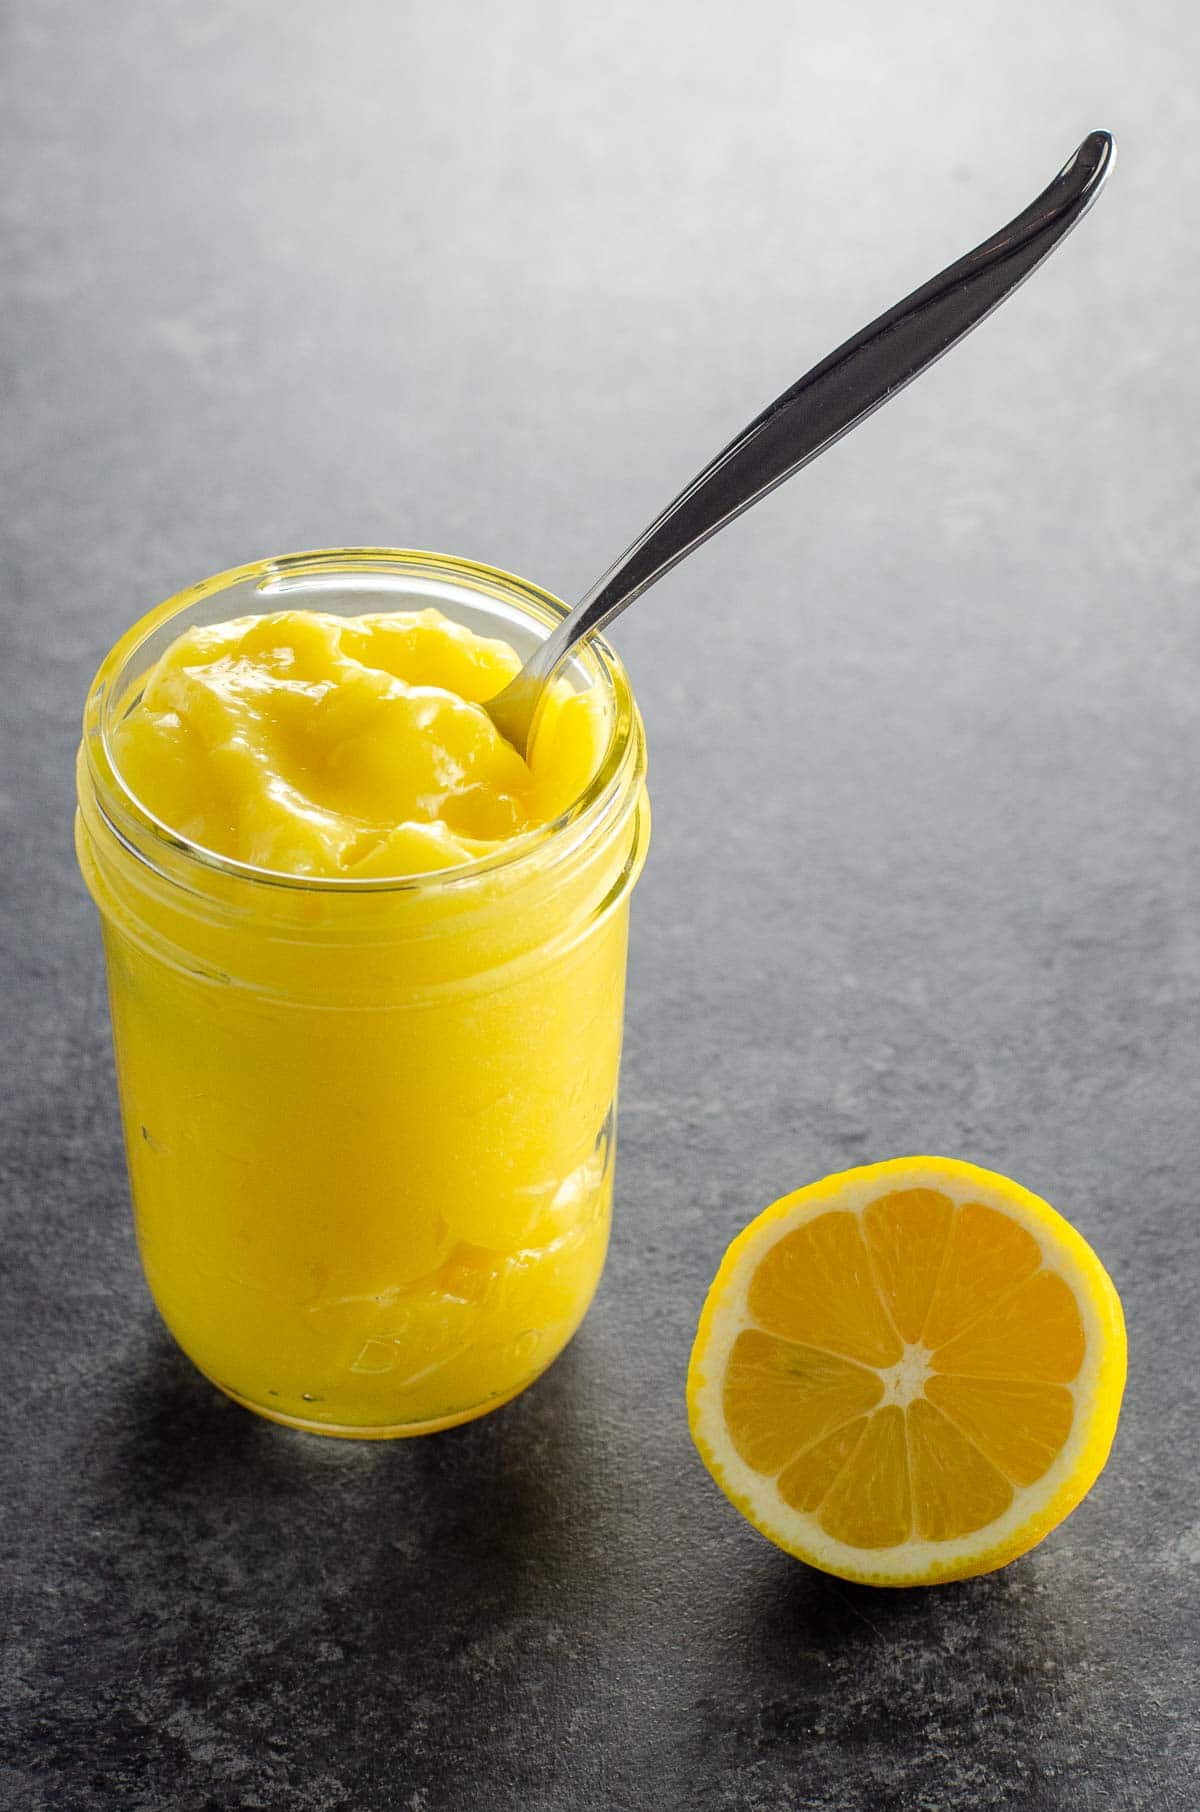 tart lemon curd in a small jar with a spoon and half a lemon